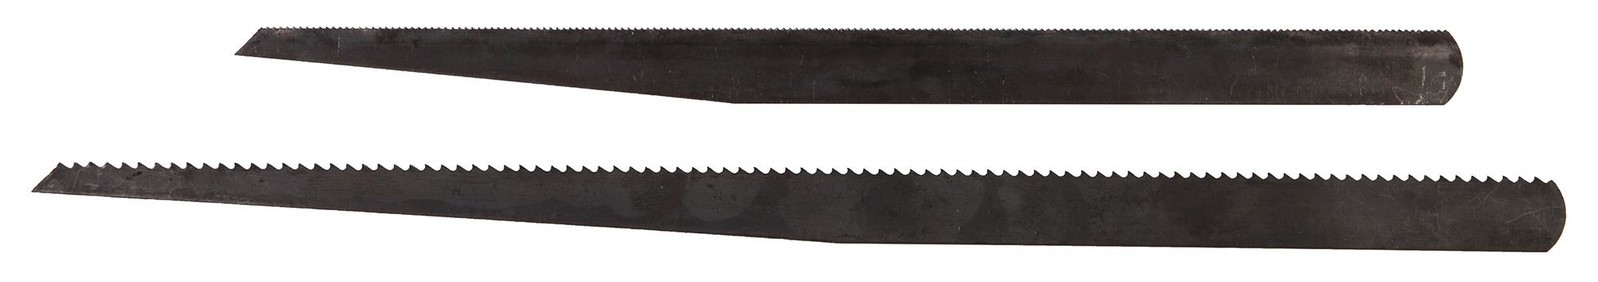 Eclipse 70-230R Metal/wood Padsaw Blades (Pack 2)